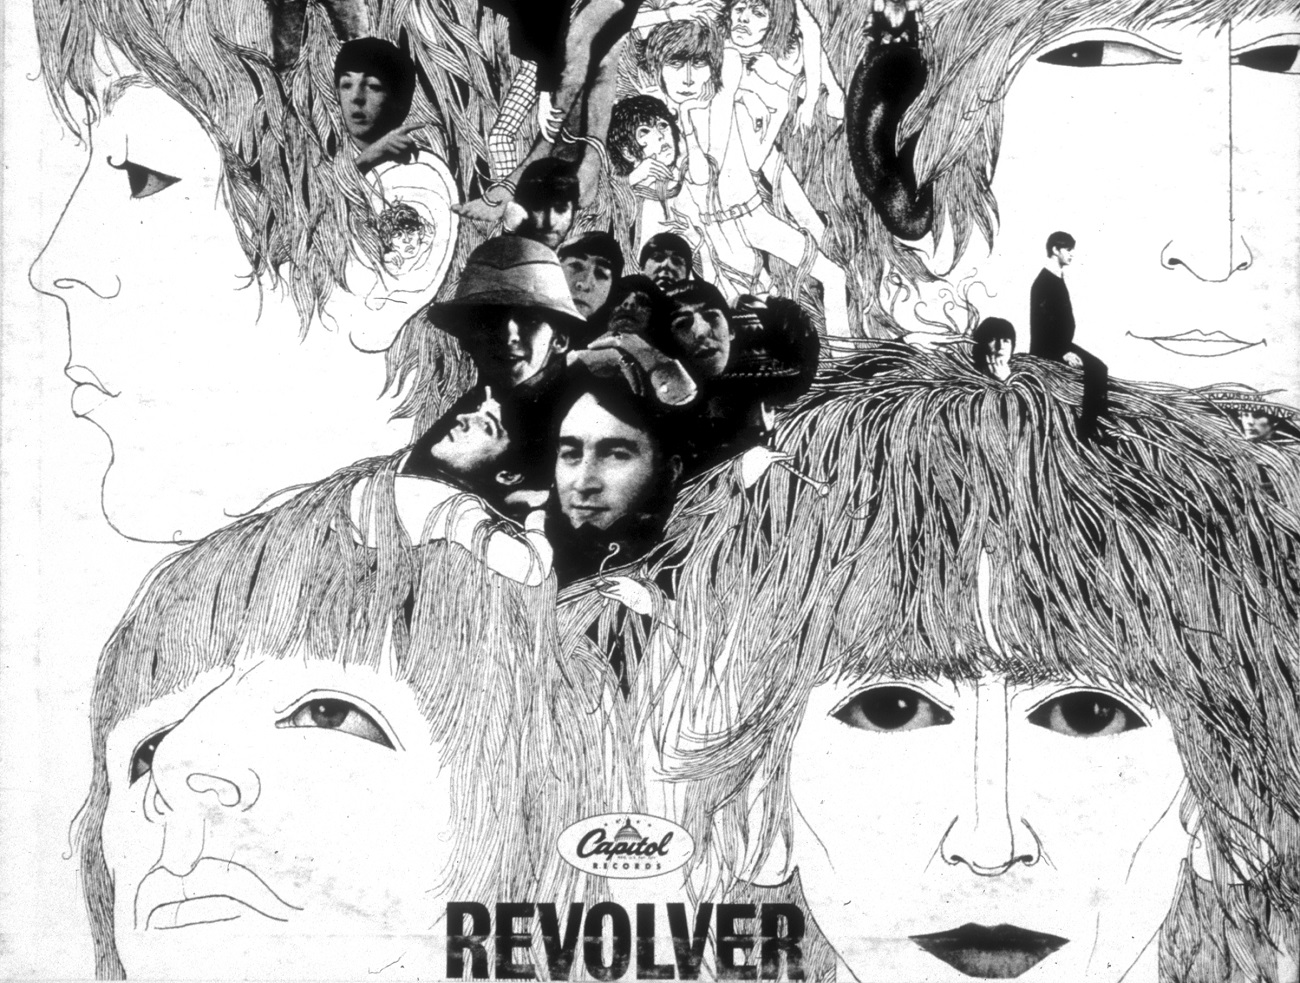 Beatles 'Revolver' album cover